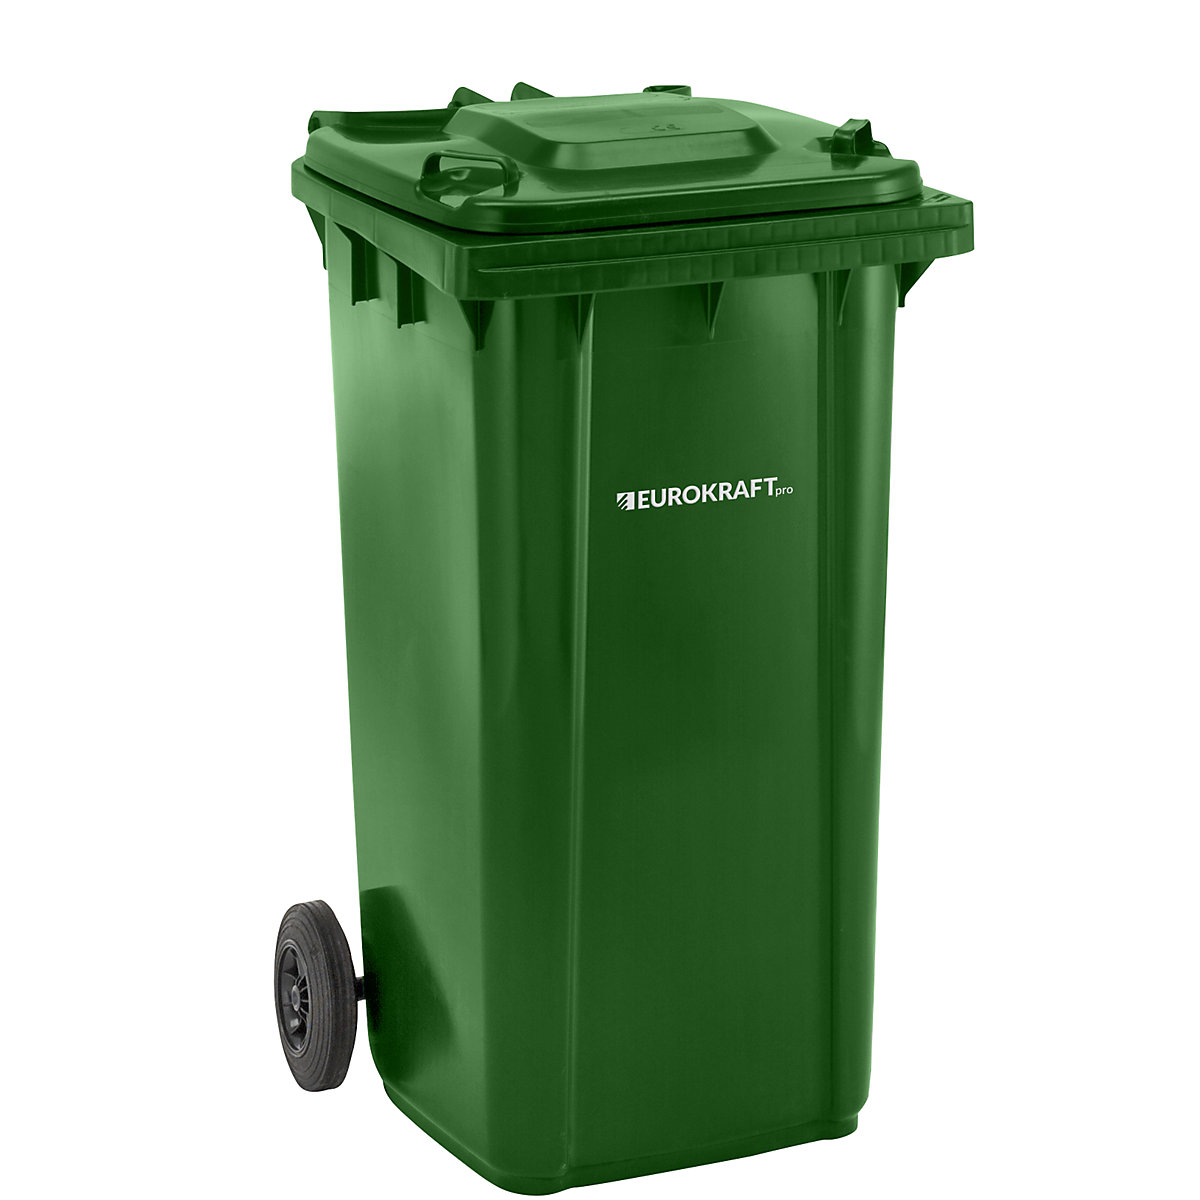 EUROKRAFTpro Mülltonne aus Kunststoff, DIN EN 840, Volumen 240 l, BxHxT 580 x 1100 x 740 mm, grün, ab 5 Stk